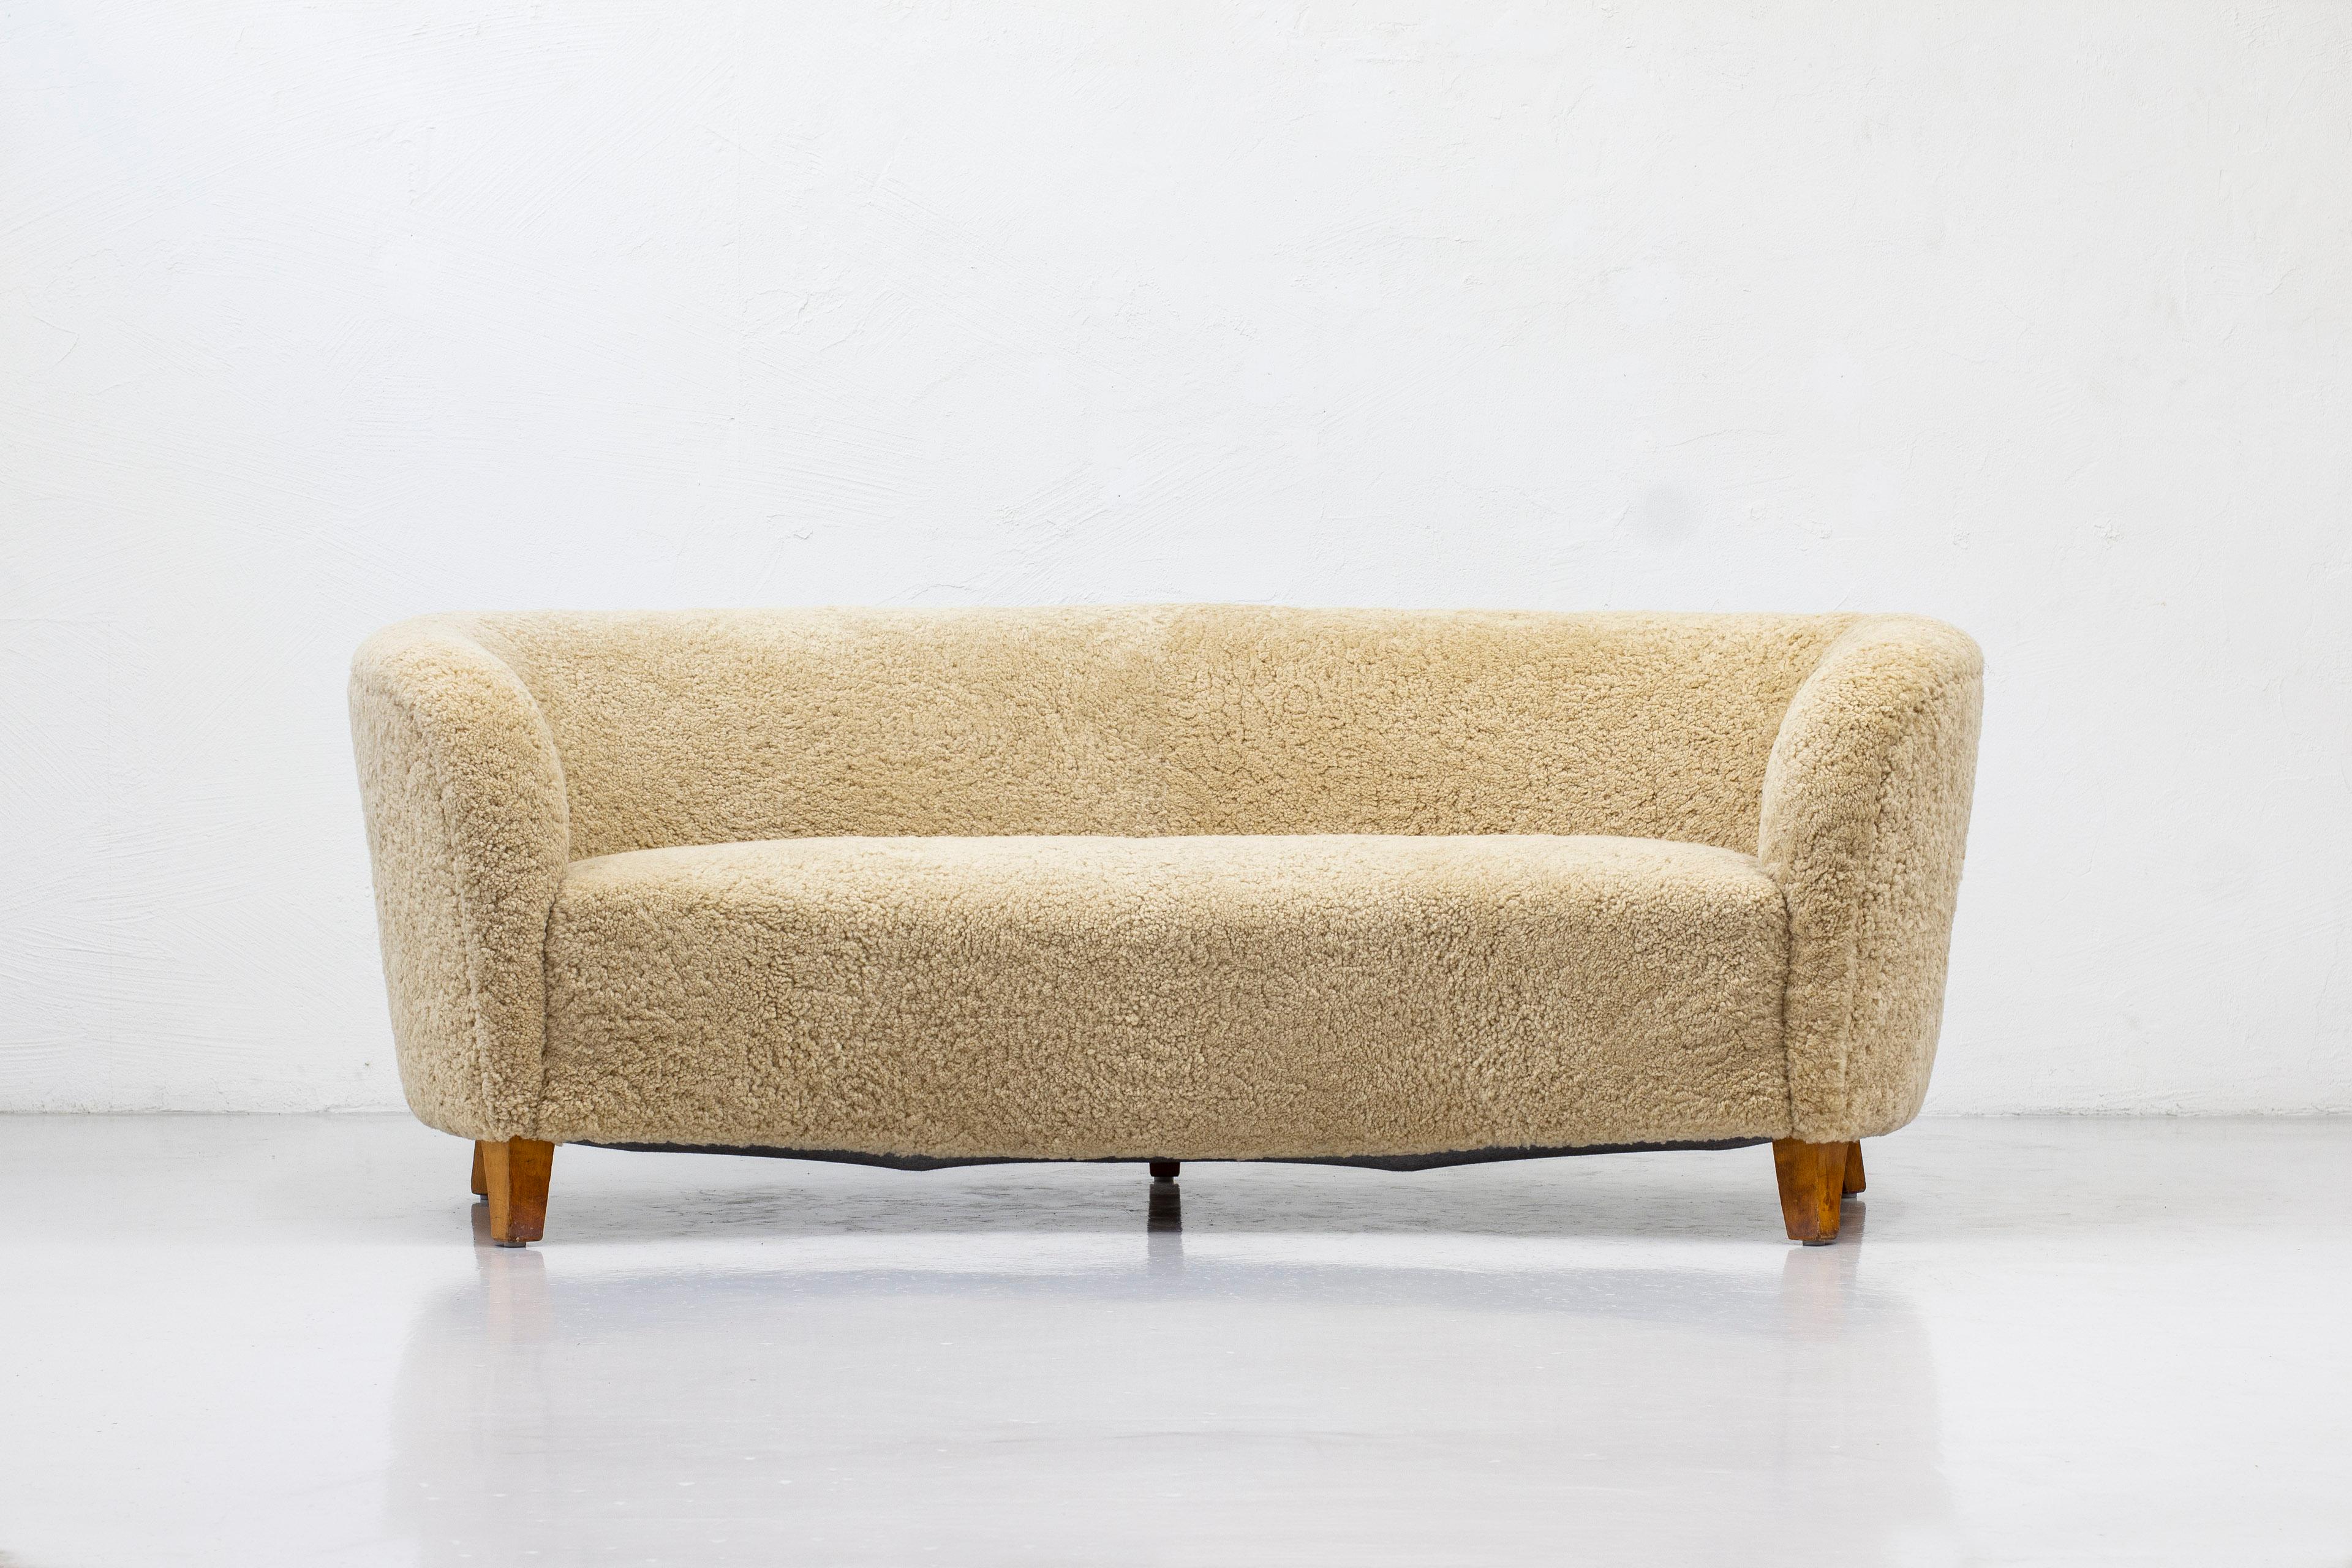 Curved Swedish Modern Sofa with Sheepskin, Sweden, 1930-40s 2